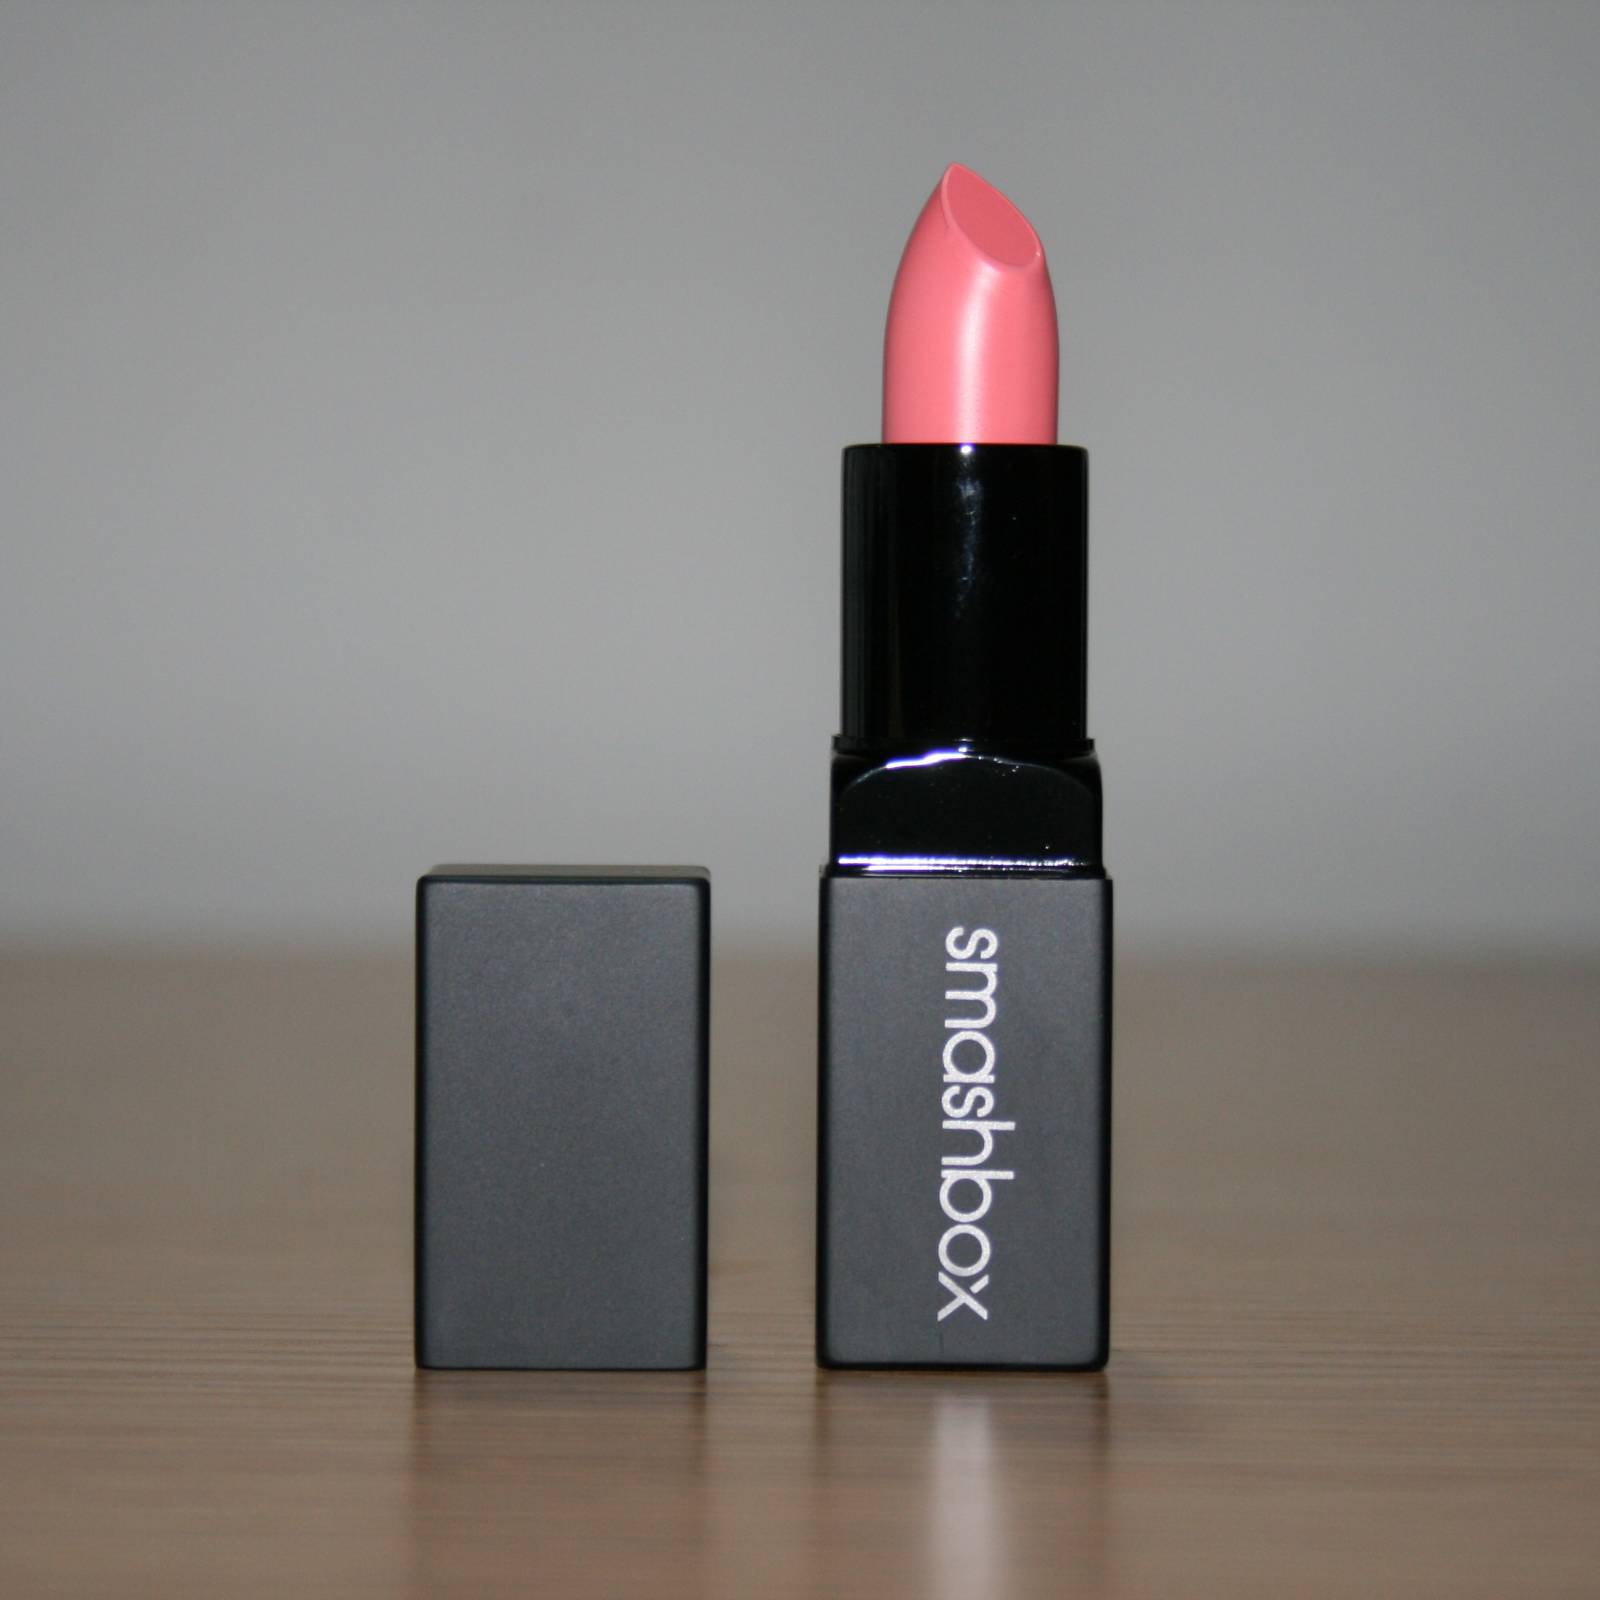 Smashbox Be Legendary Matte Lipstick in Paris Pink Matte